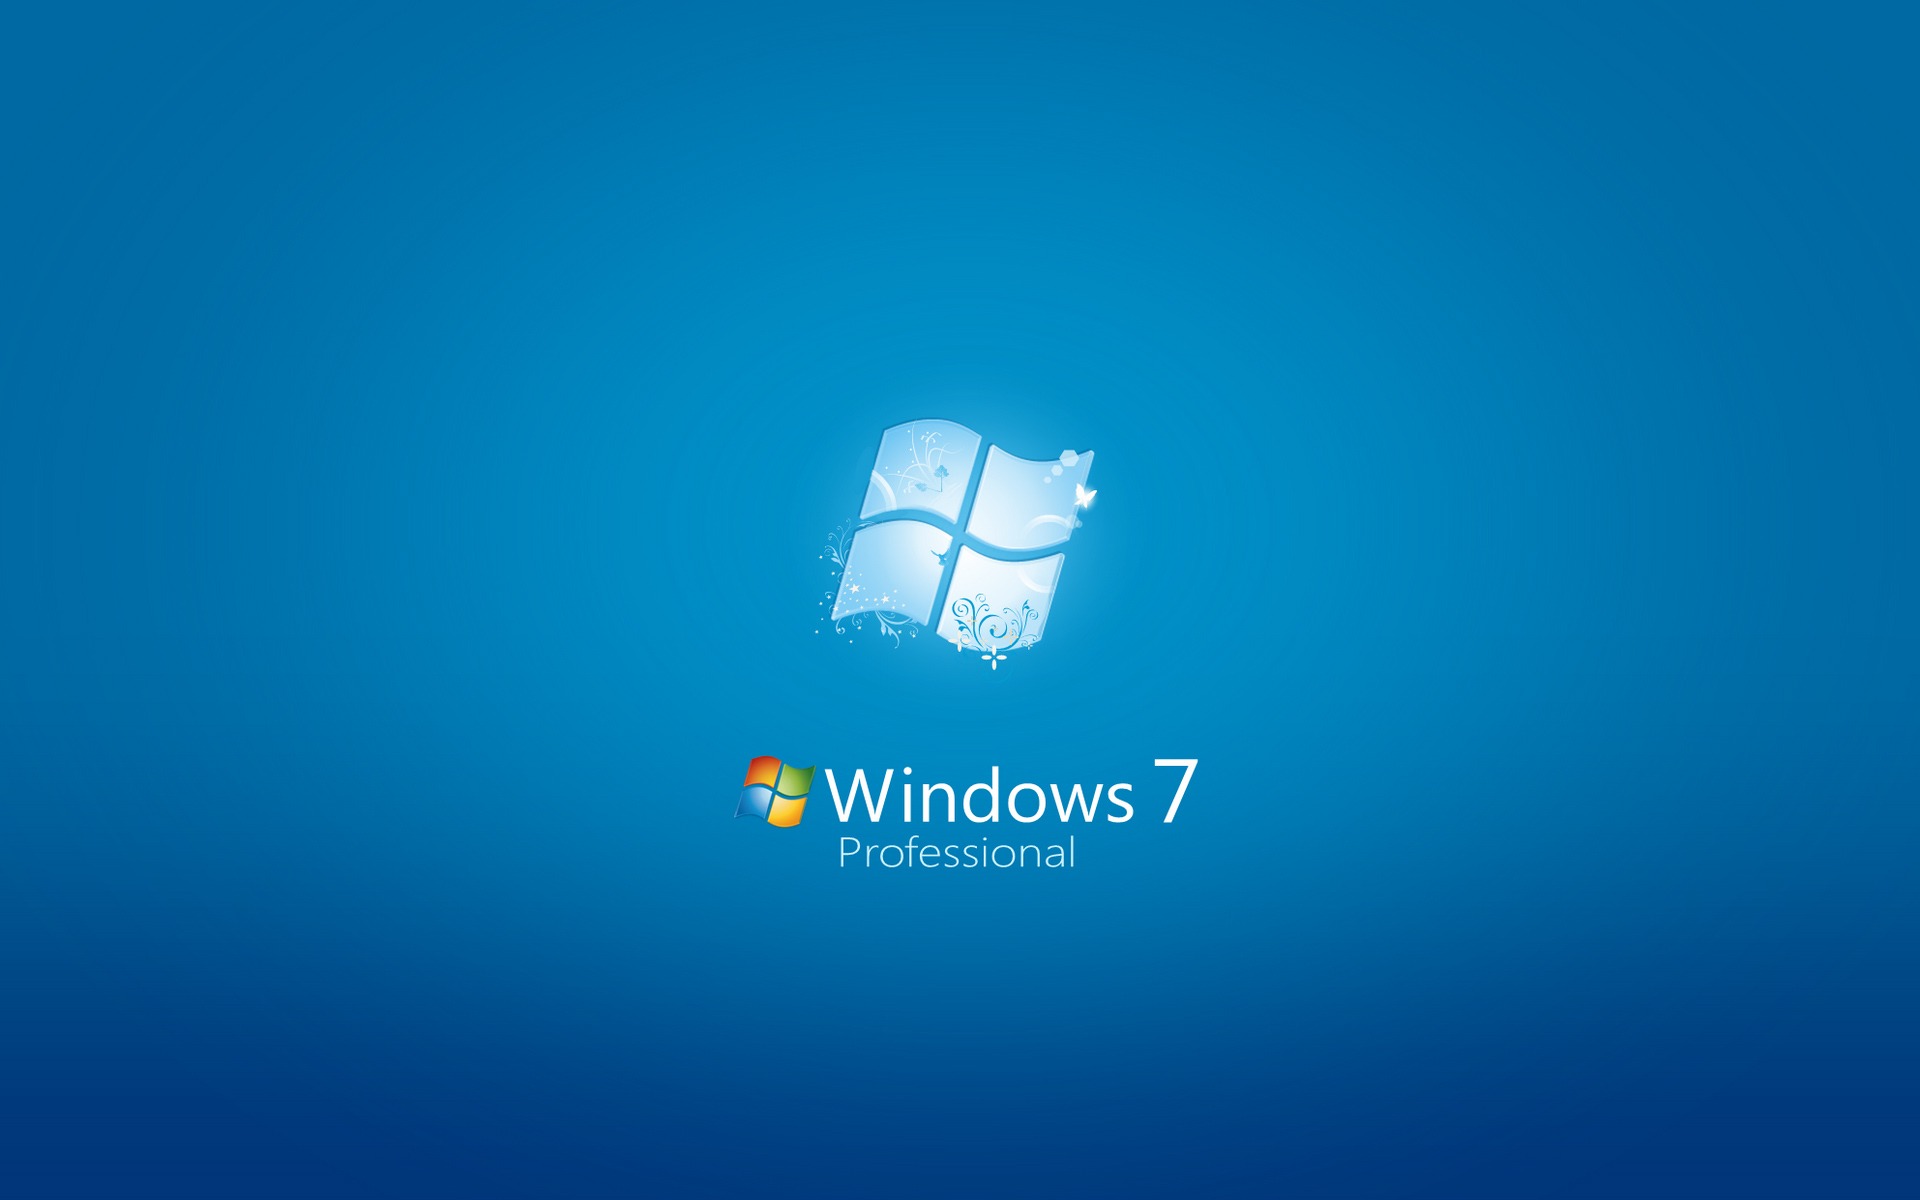 Windows Professional Wallpaper HD